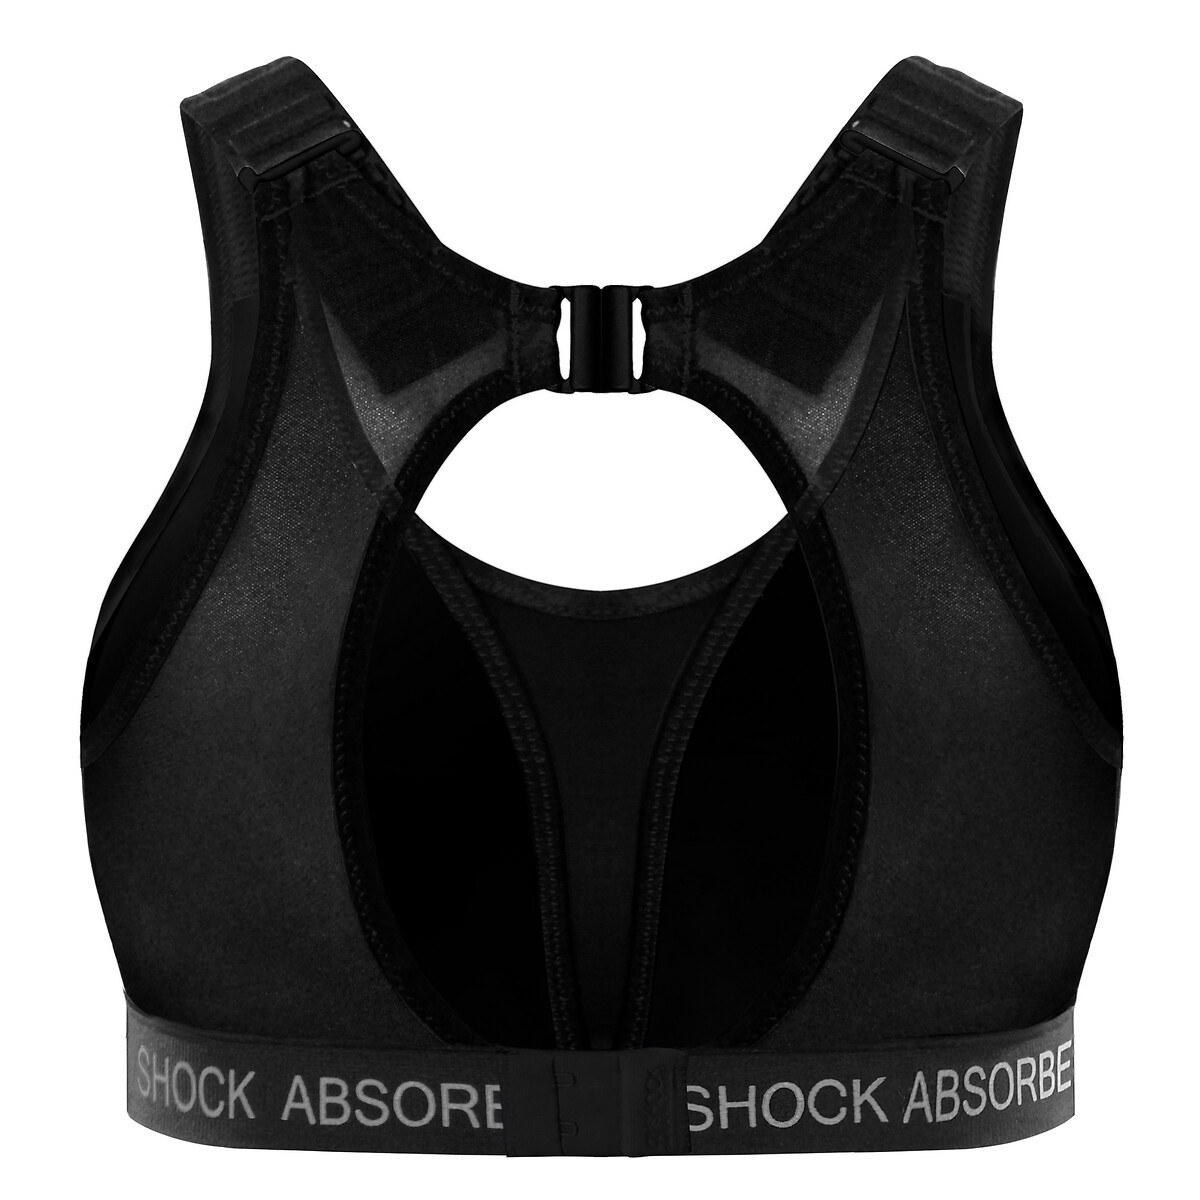 Ultimate run bra, black, Champion Shock Absorber